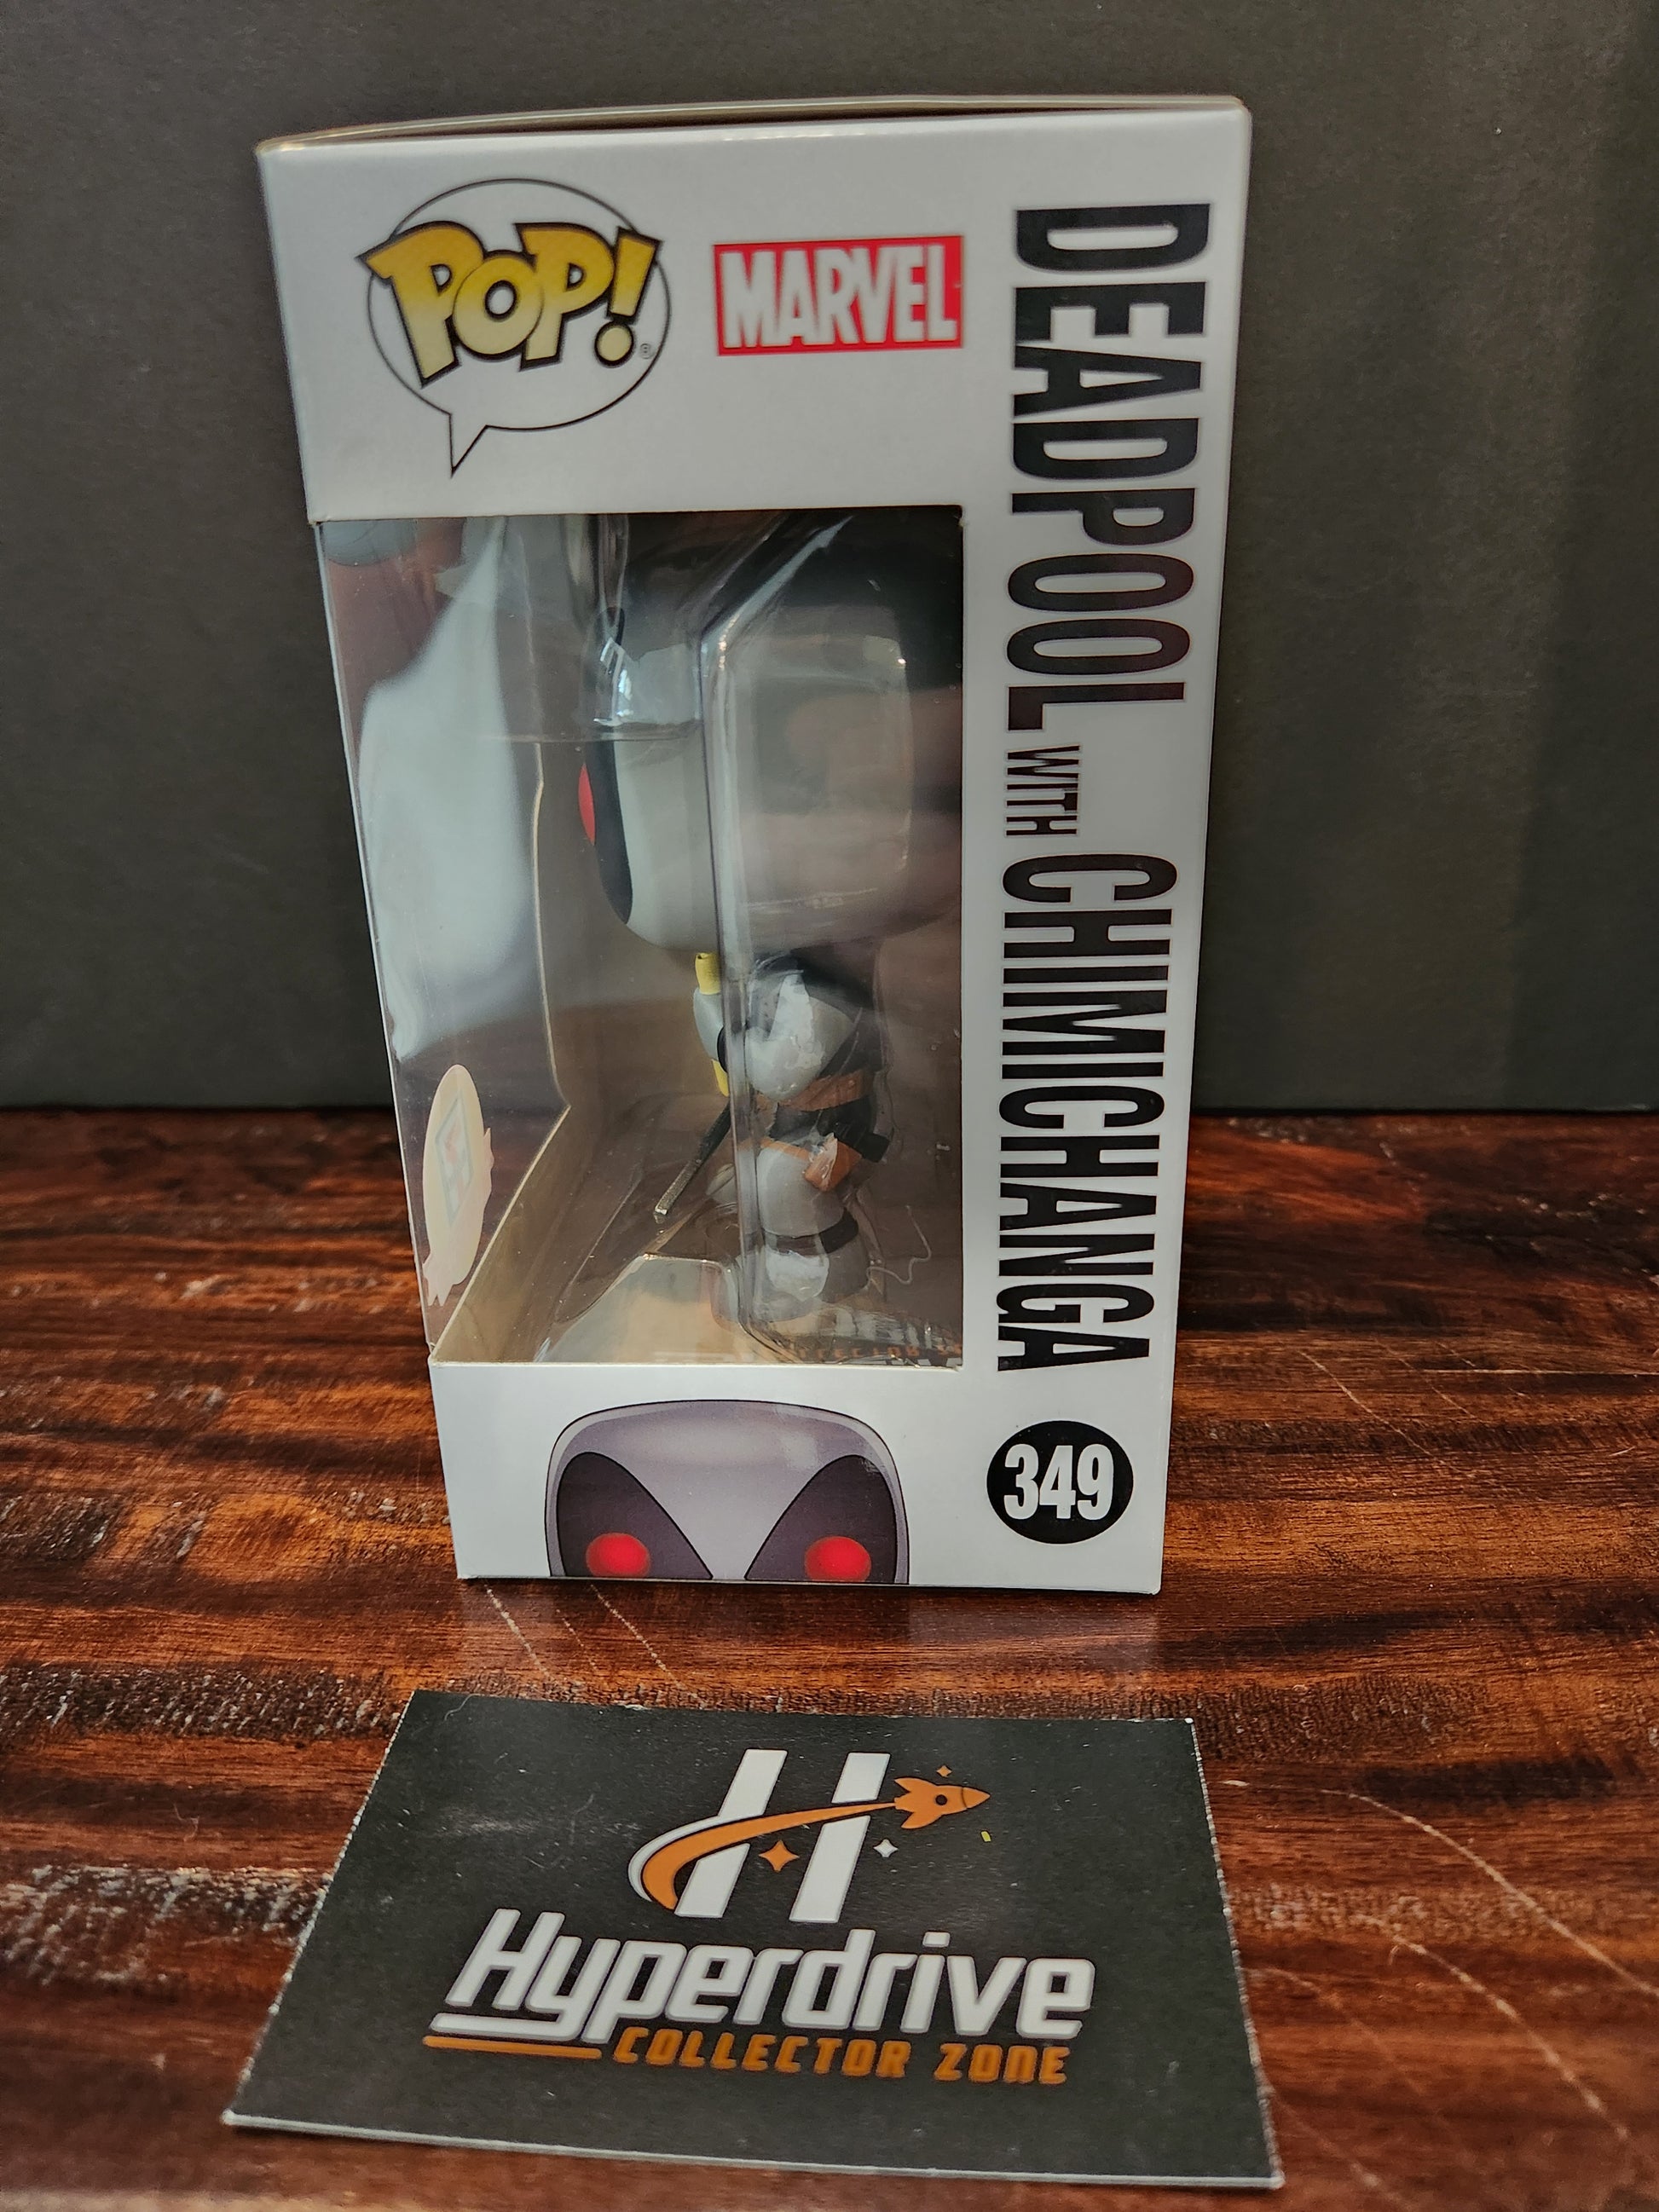 Marvel Deadpool with Chimichanga Funko PoP! Vinyl Figure Exclusive Funko